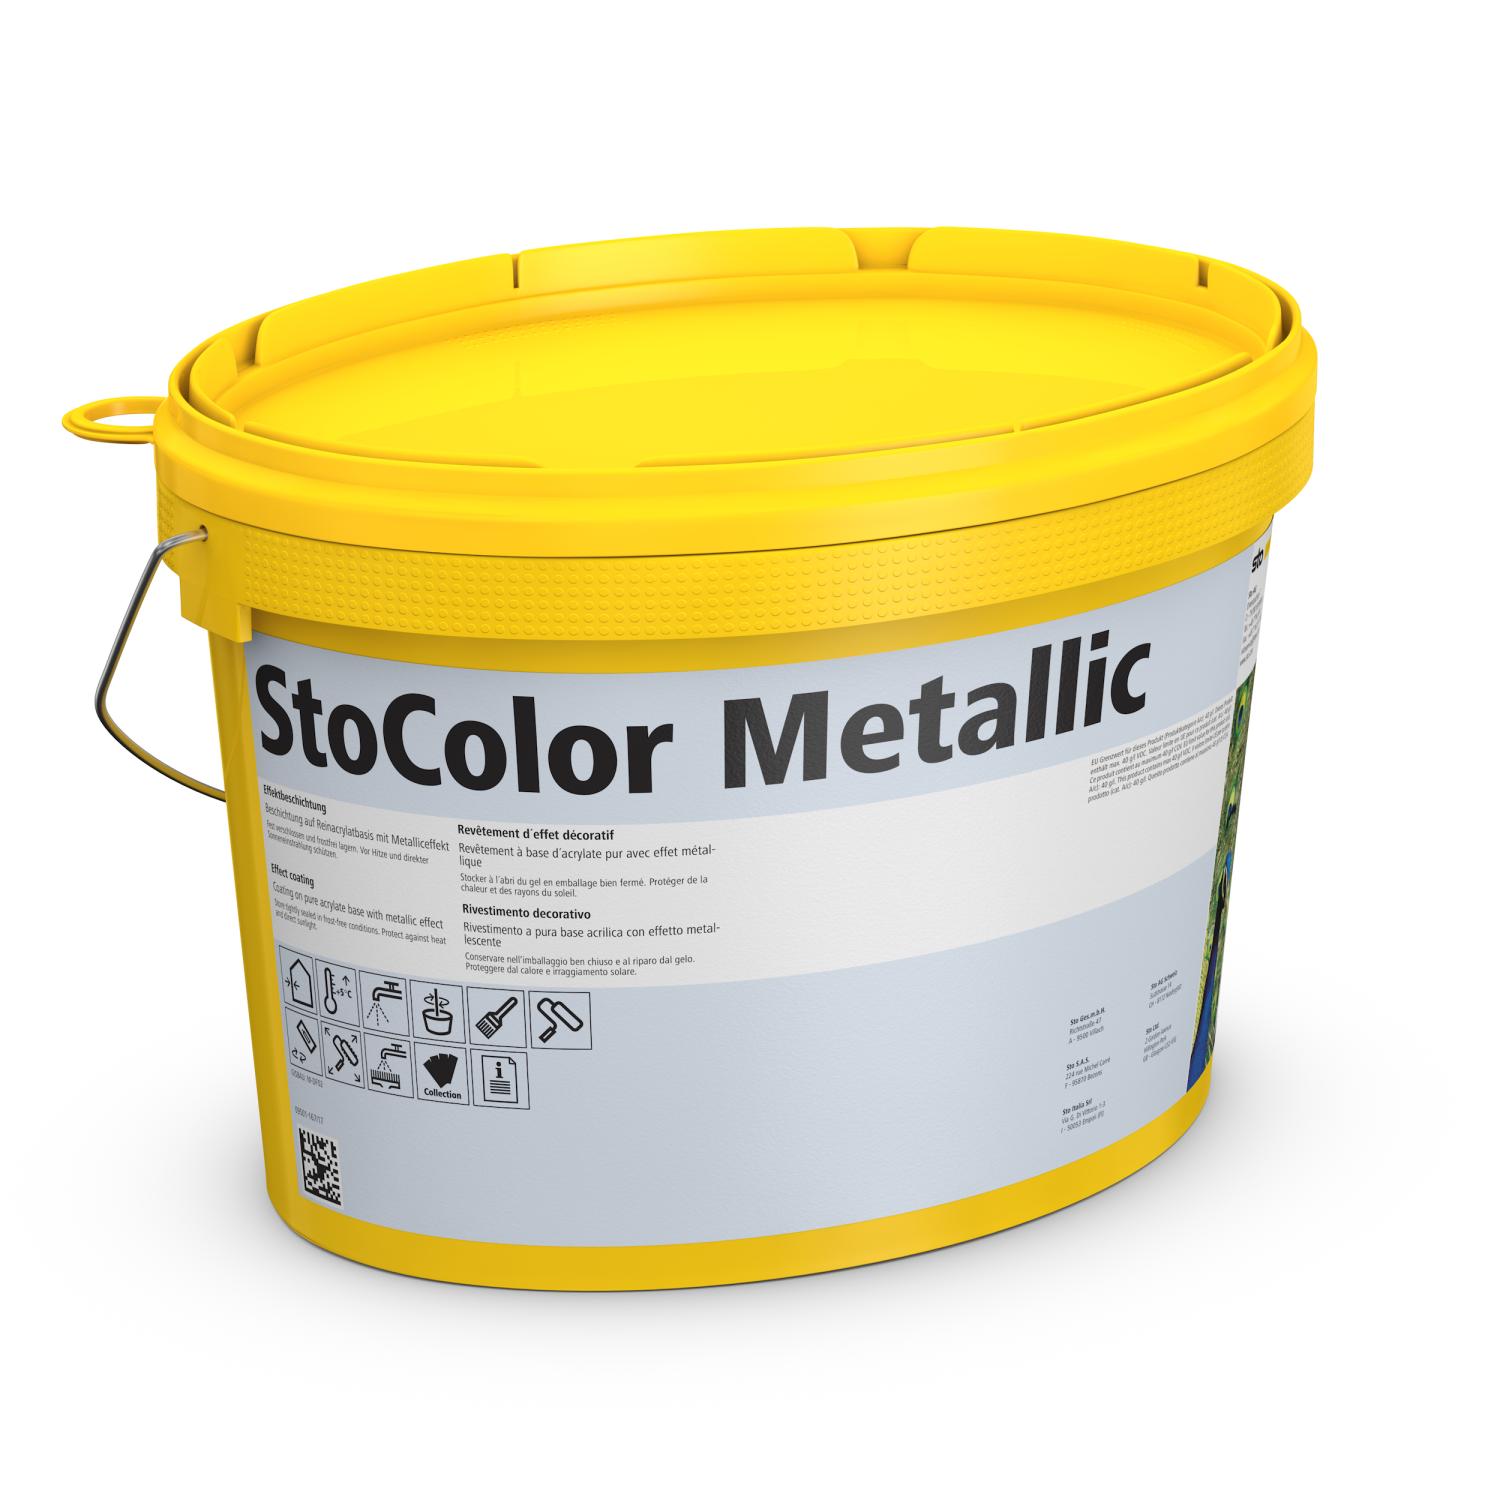 StoColor Metallic getönt - 10 l Eimer